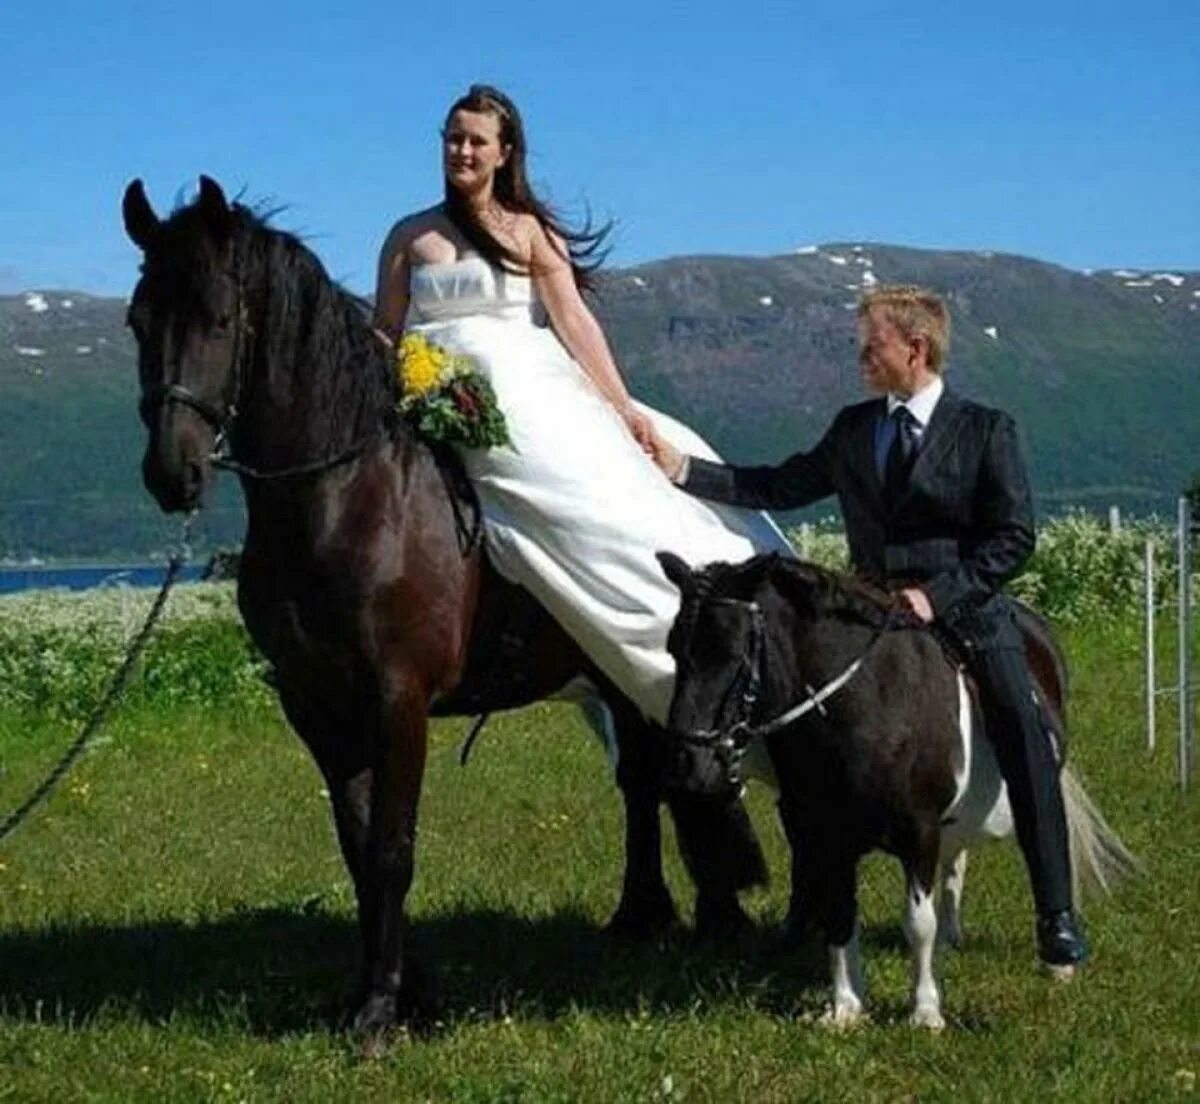 Пара смешная картинка. Свадьба на лошадях. Свадебная фотосессия с лошадьми. Прикольные Свадебные фотосессии. Свадьба фото.